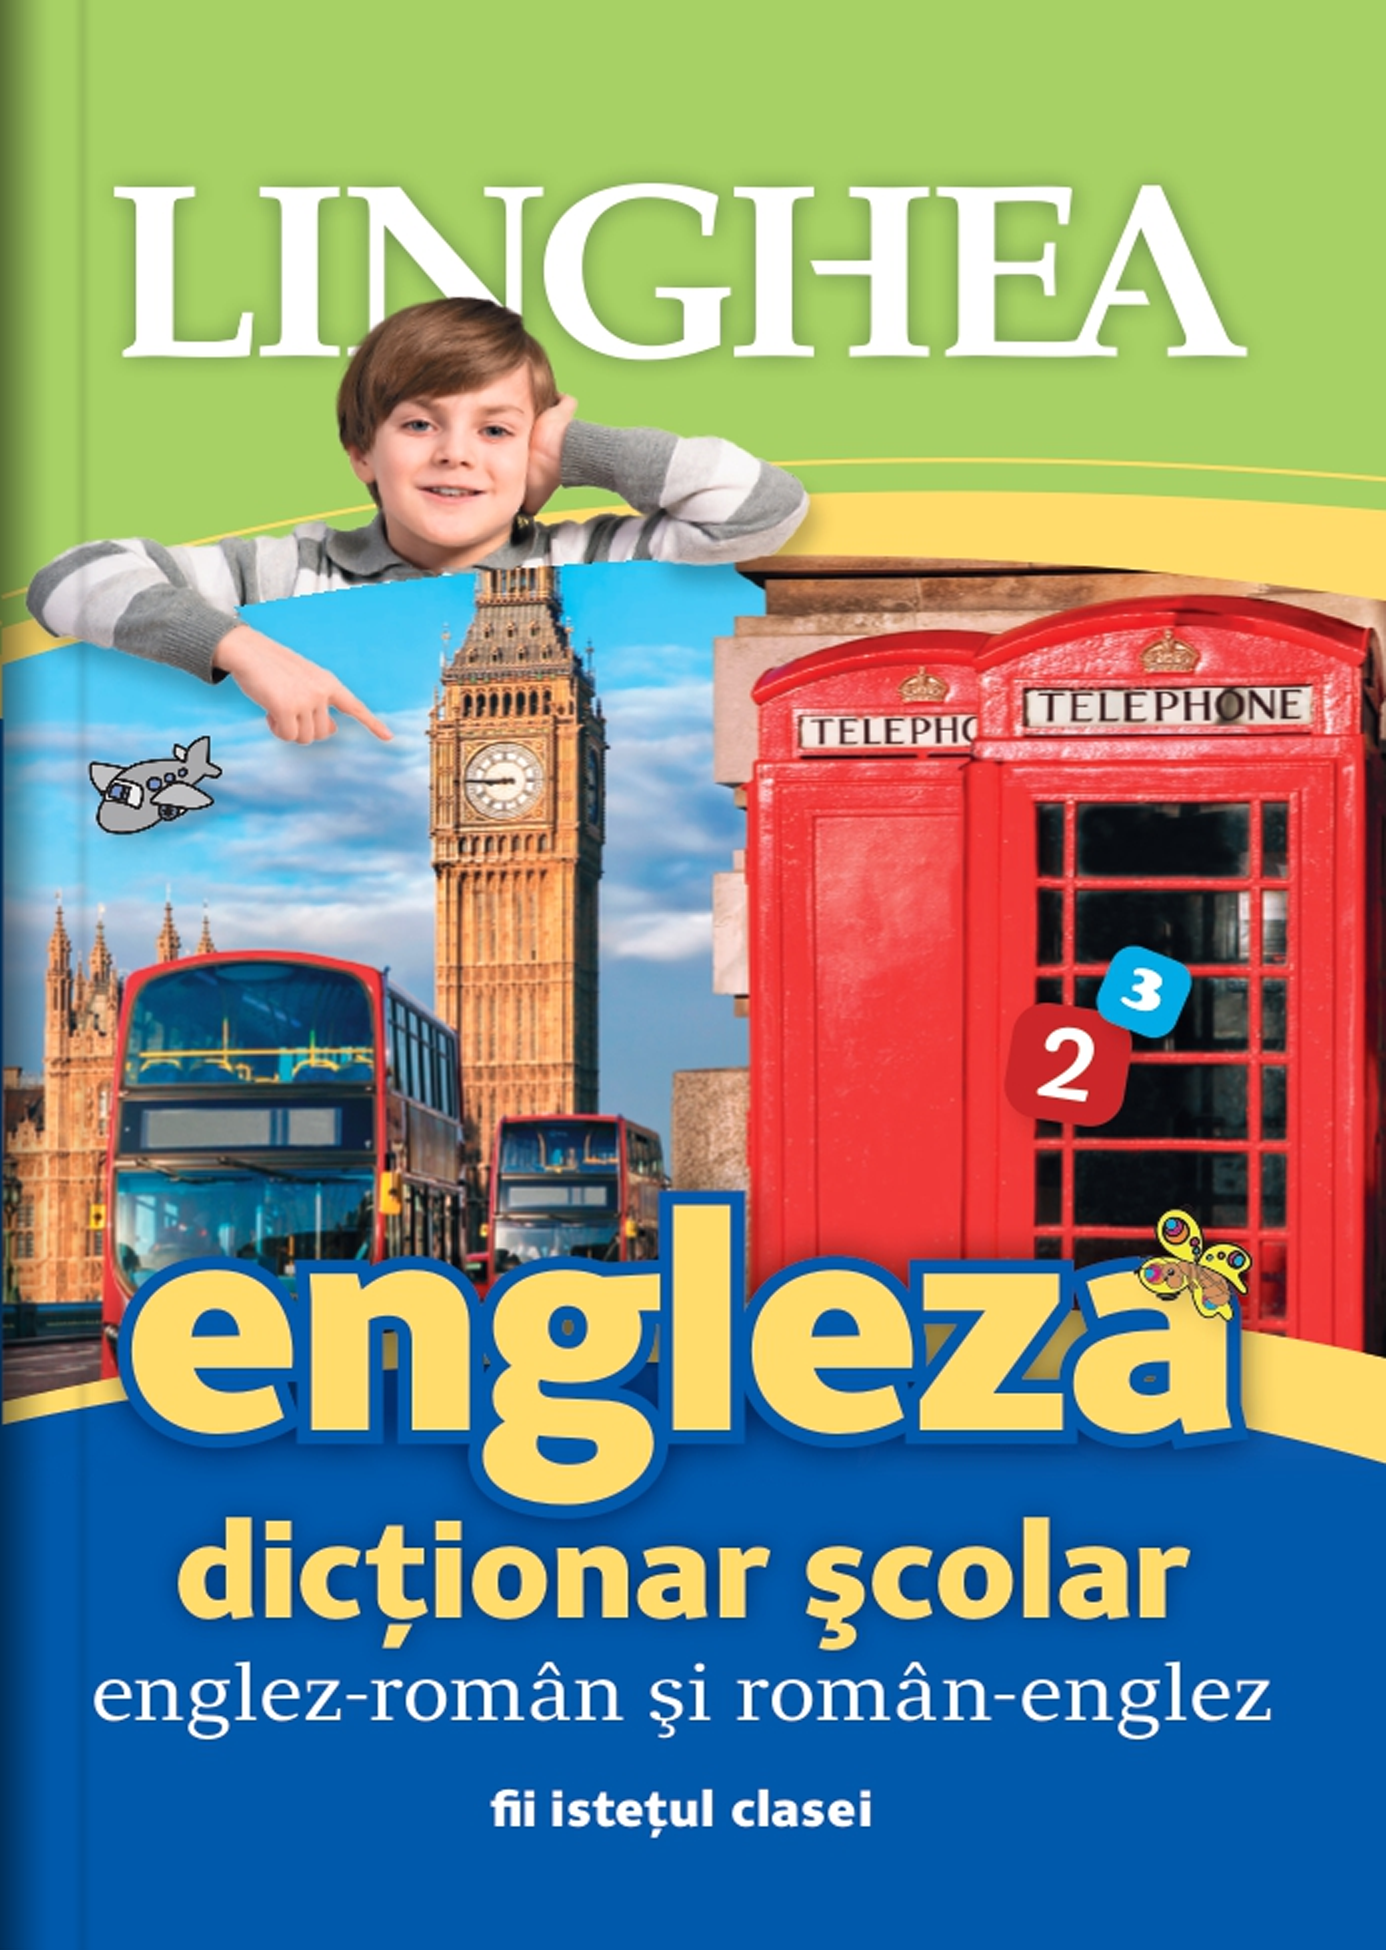 Dicționar școlar englez-român și român-englez